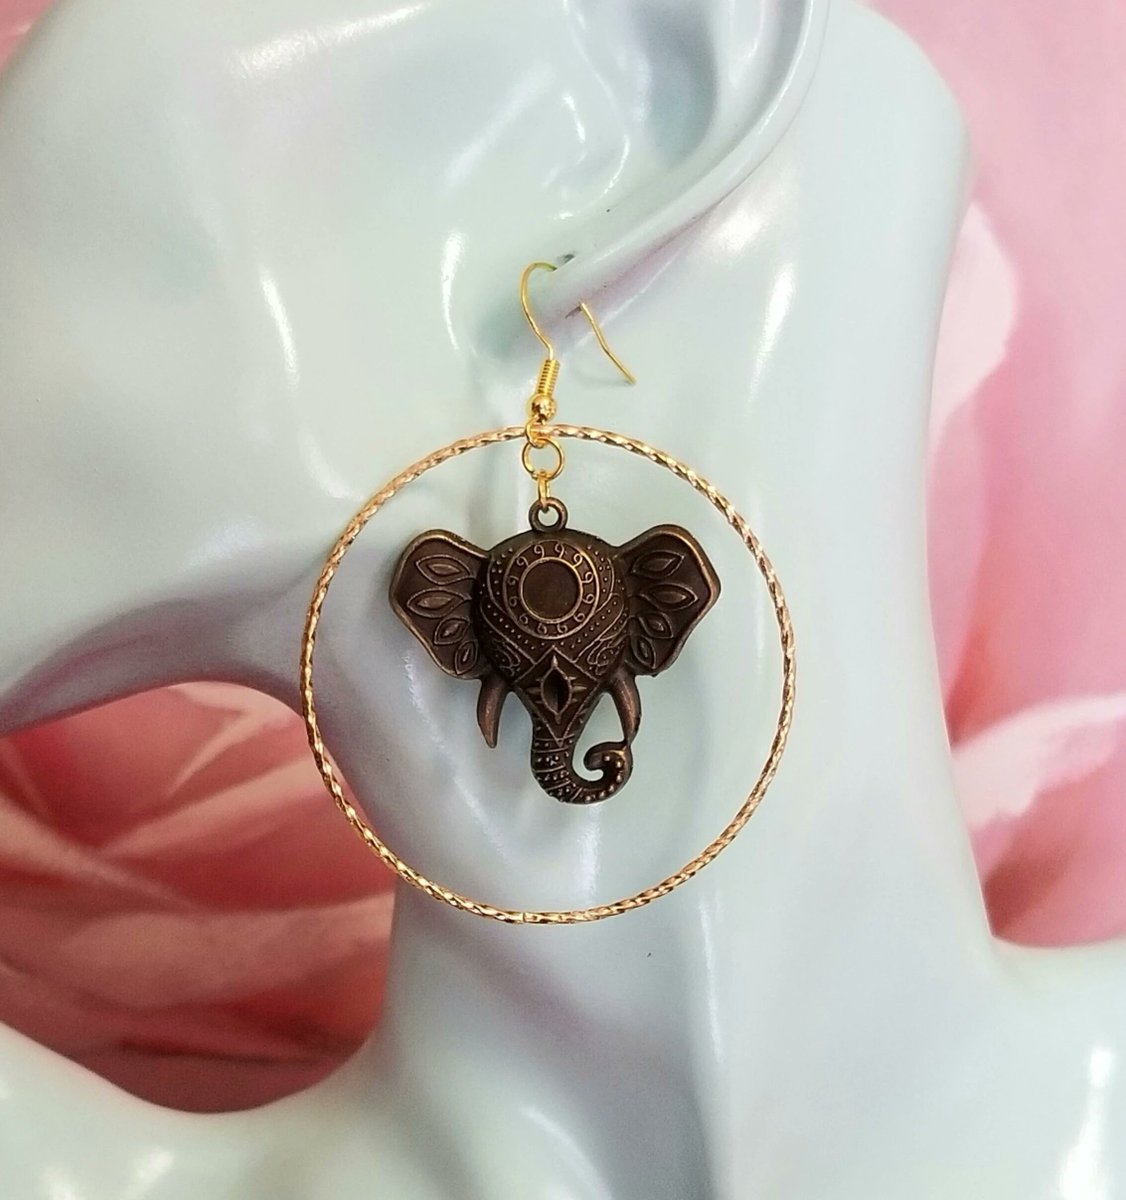 Elephant Hoop Earrings, 14k Gold Hoop Earrings, Bronze Elephant Earrings #jewelry #handmadejewelry #giftsforher #mothersdaygifts #graduationgift #earrings #goldearrings #hoopearrings #elephantearrings #elephant #elephants #bohemianjewelry

etsy.me/3xQ7E9S via @Etsy